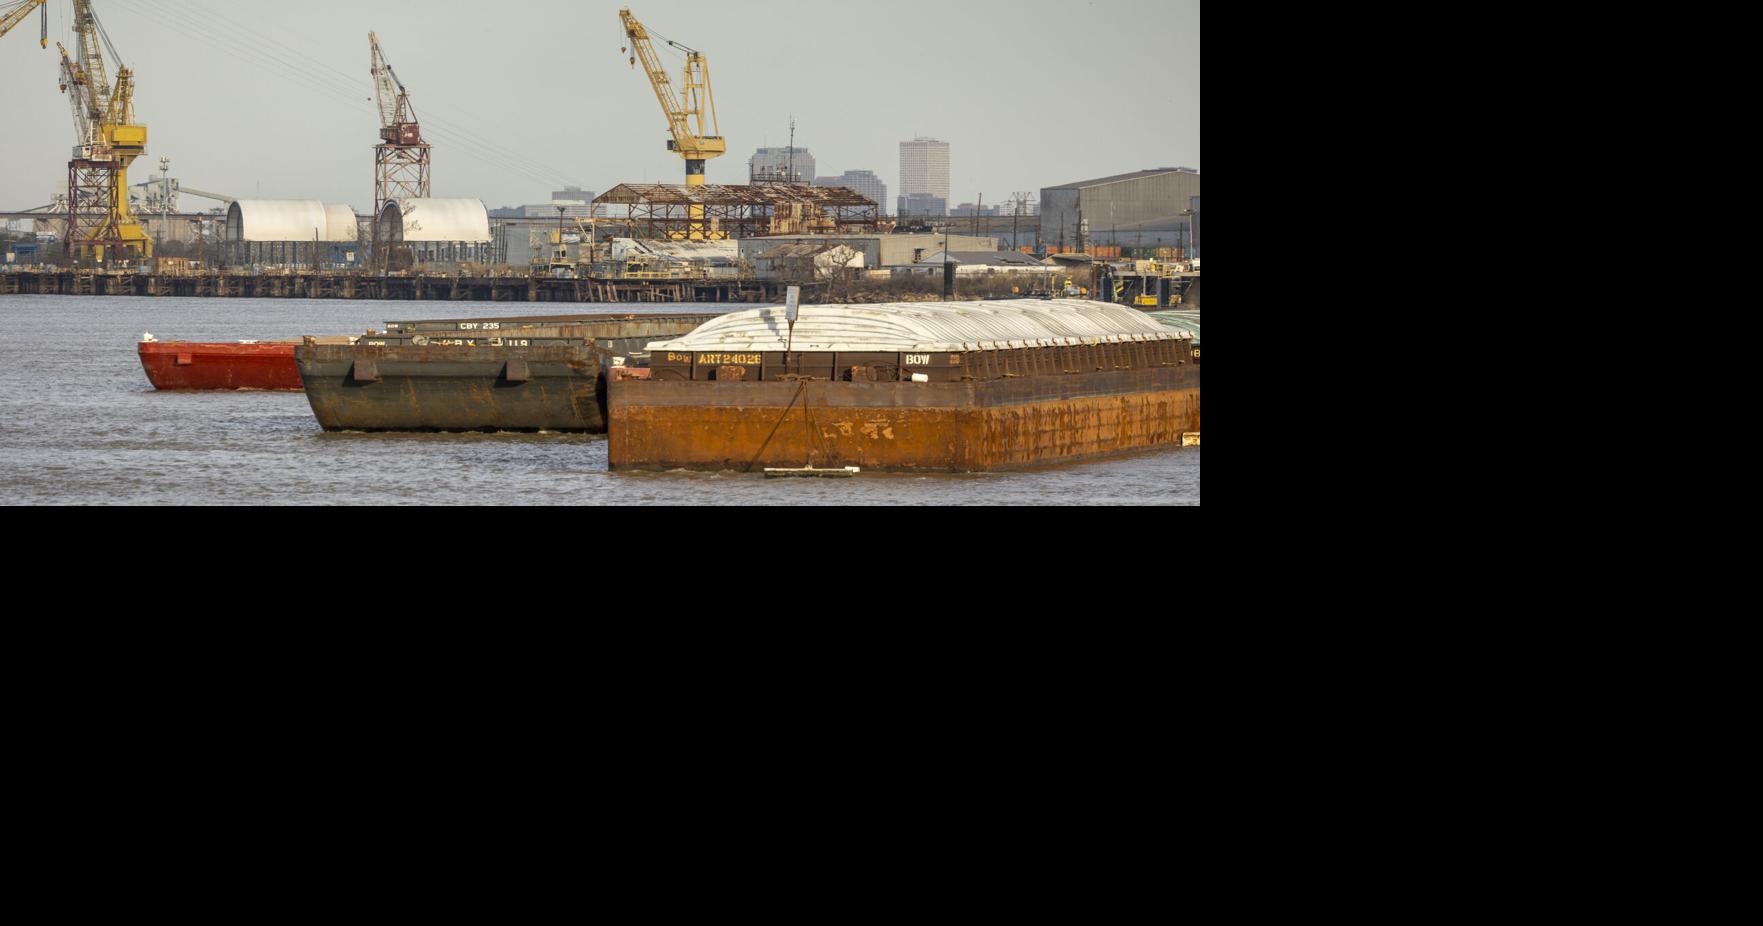 Port of South Louisiana delays $330 million deal to buy former Avondale shipyard